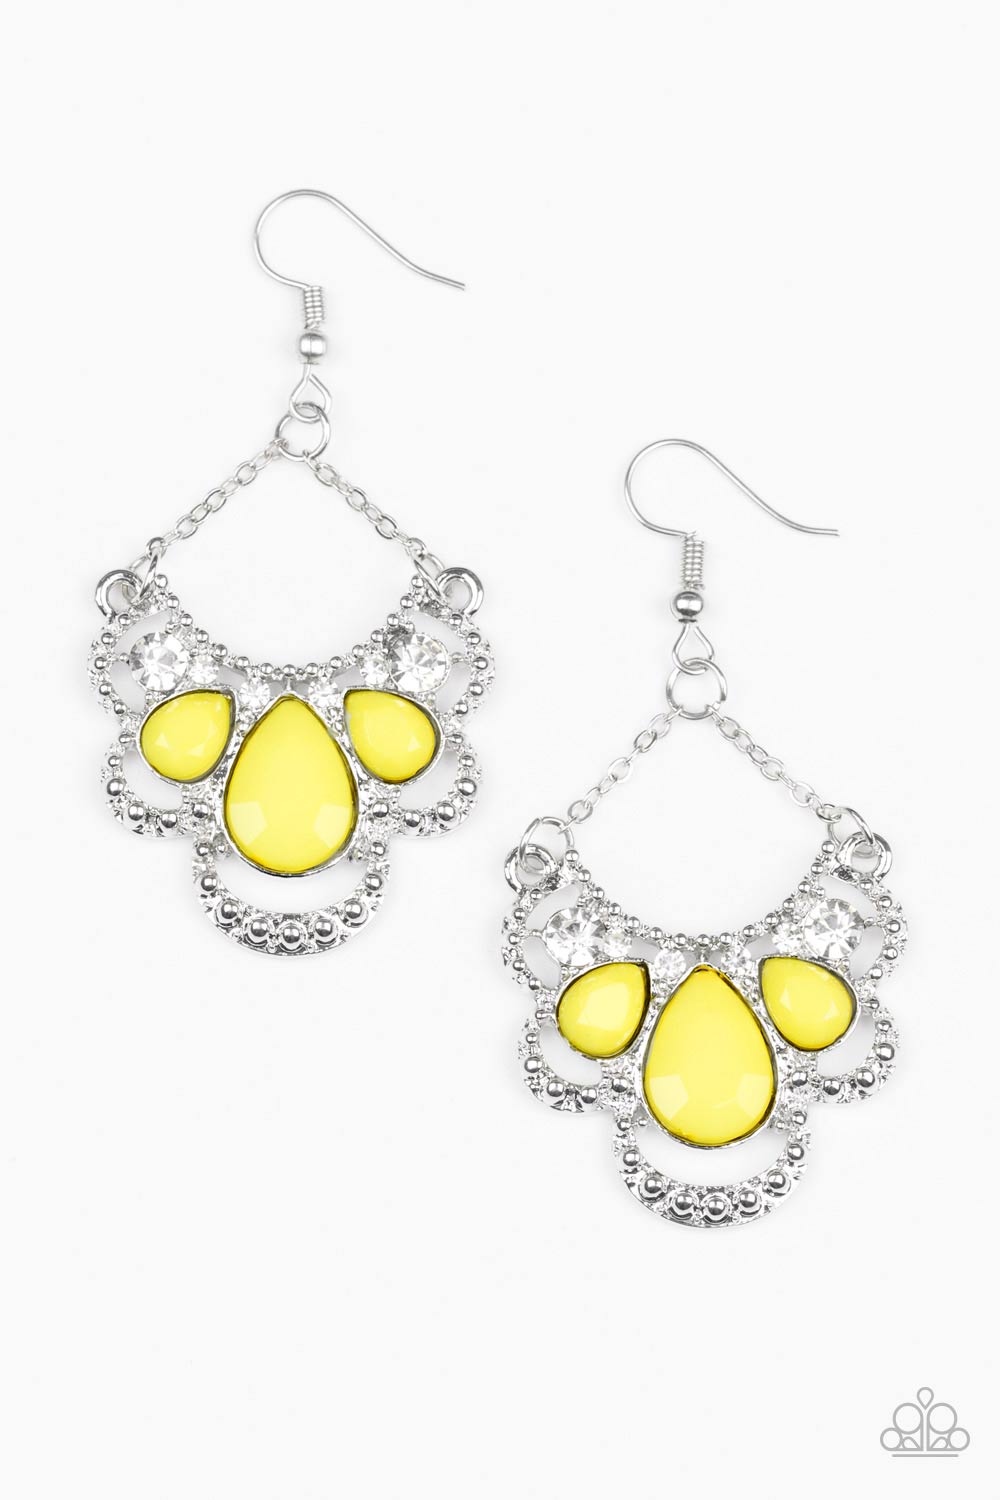 Paparazzi Caribbean Royalty - Yellow - Rhinestones Earrings - $5 Jewelry With Ashley Swint